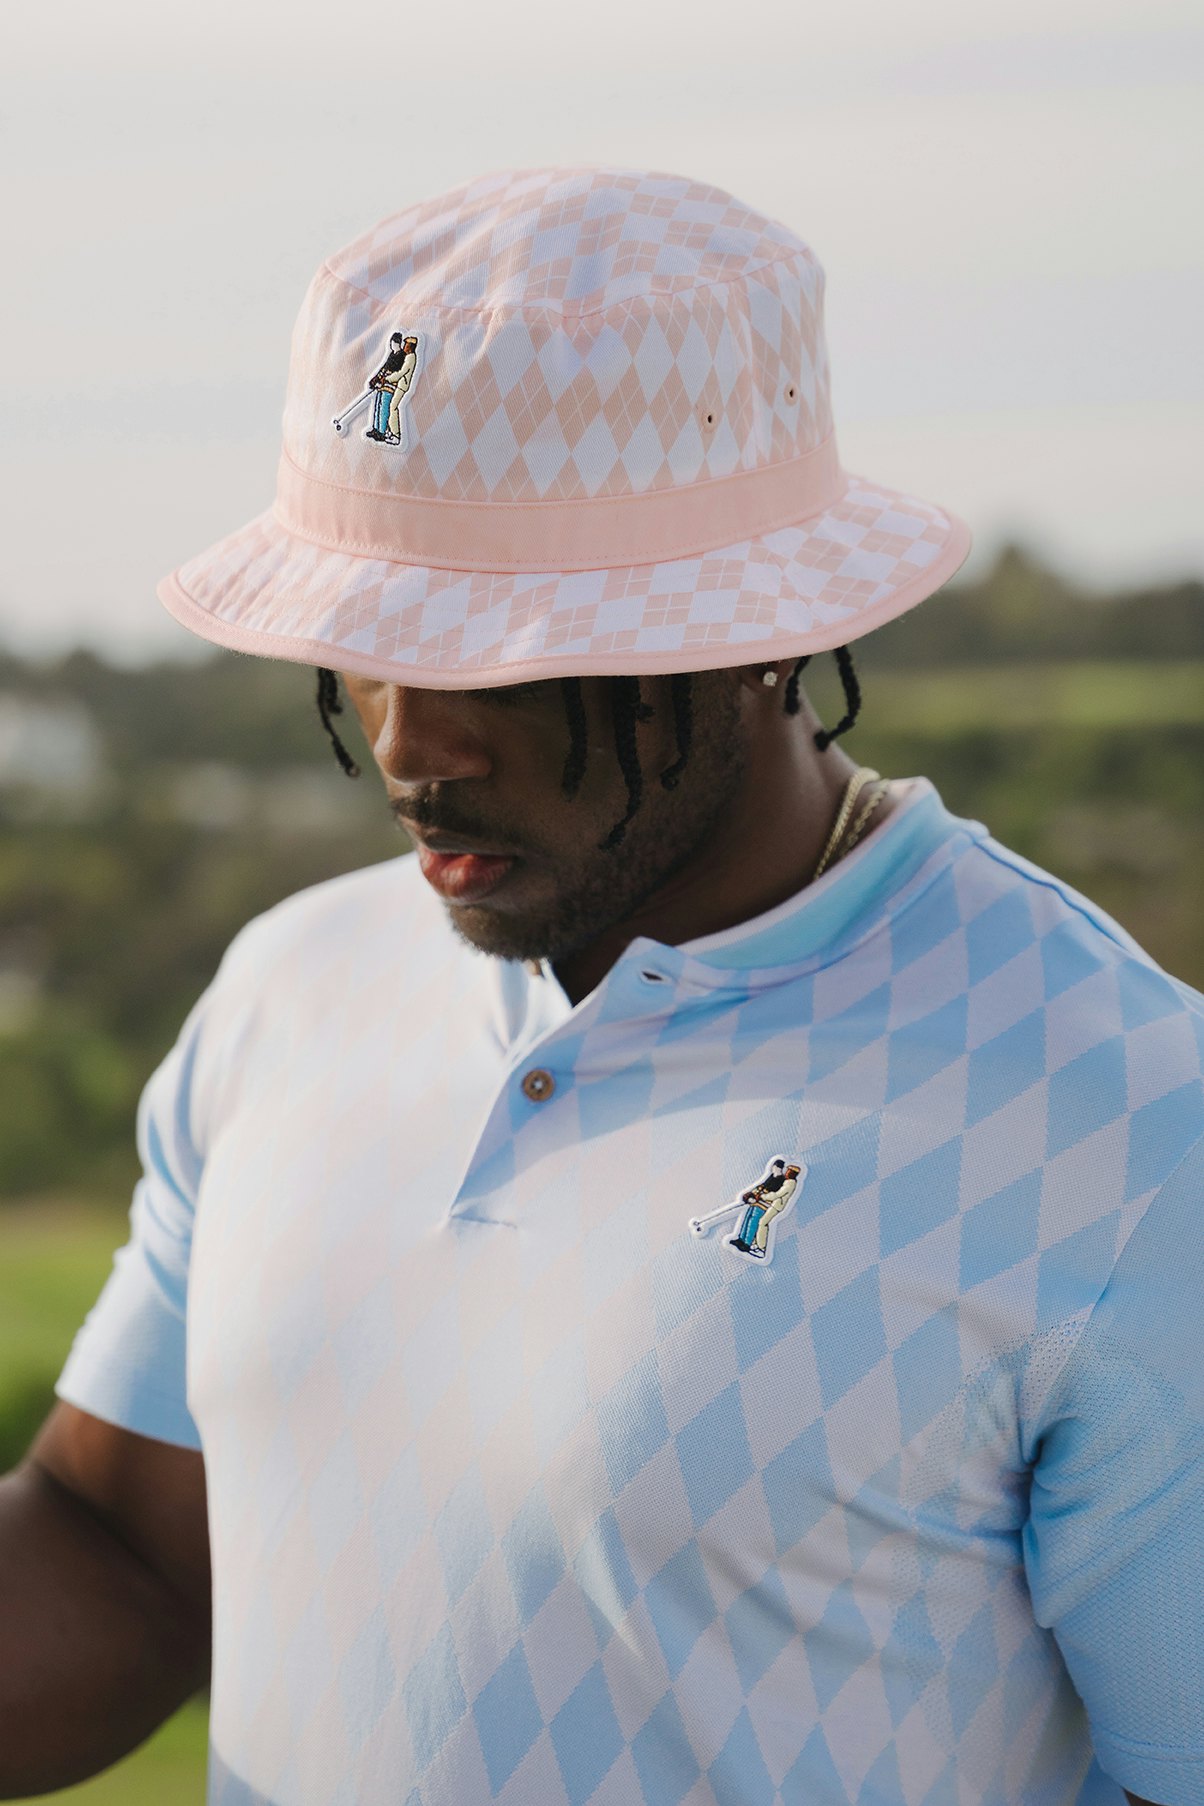 Adidas honors Adam Sandler's 'Happy Gilmore' with amazing golf apparel